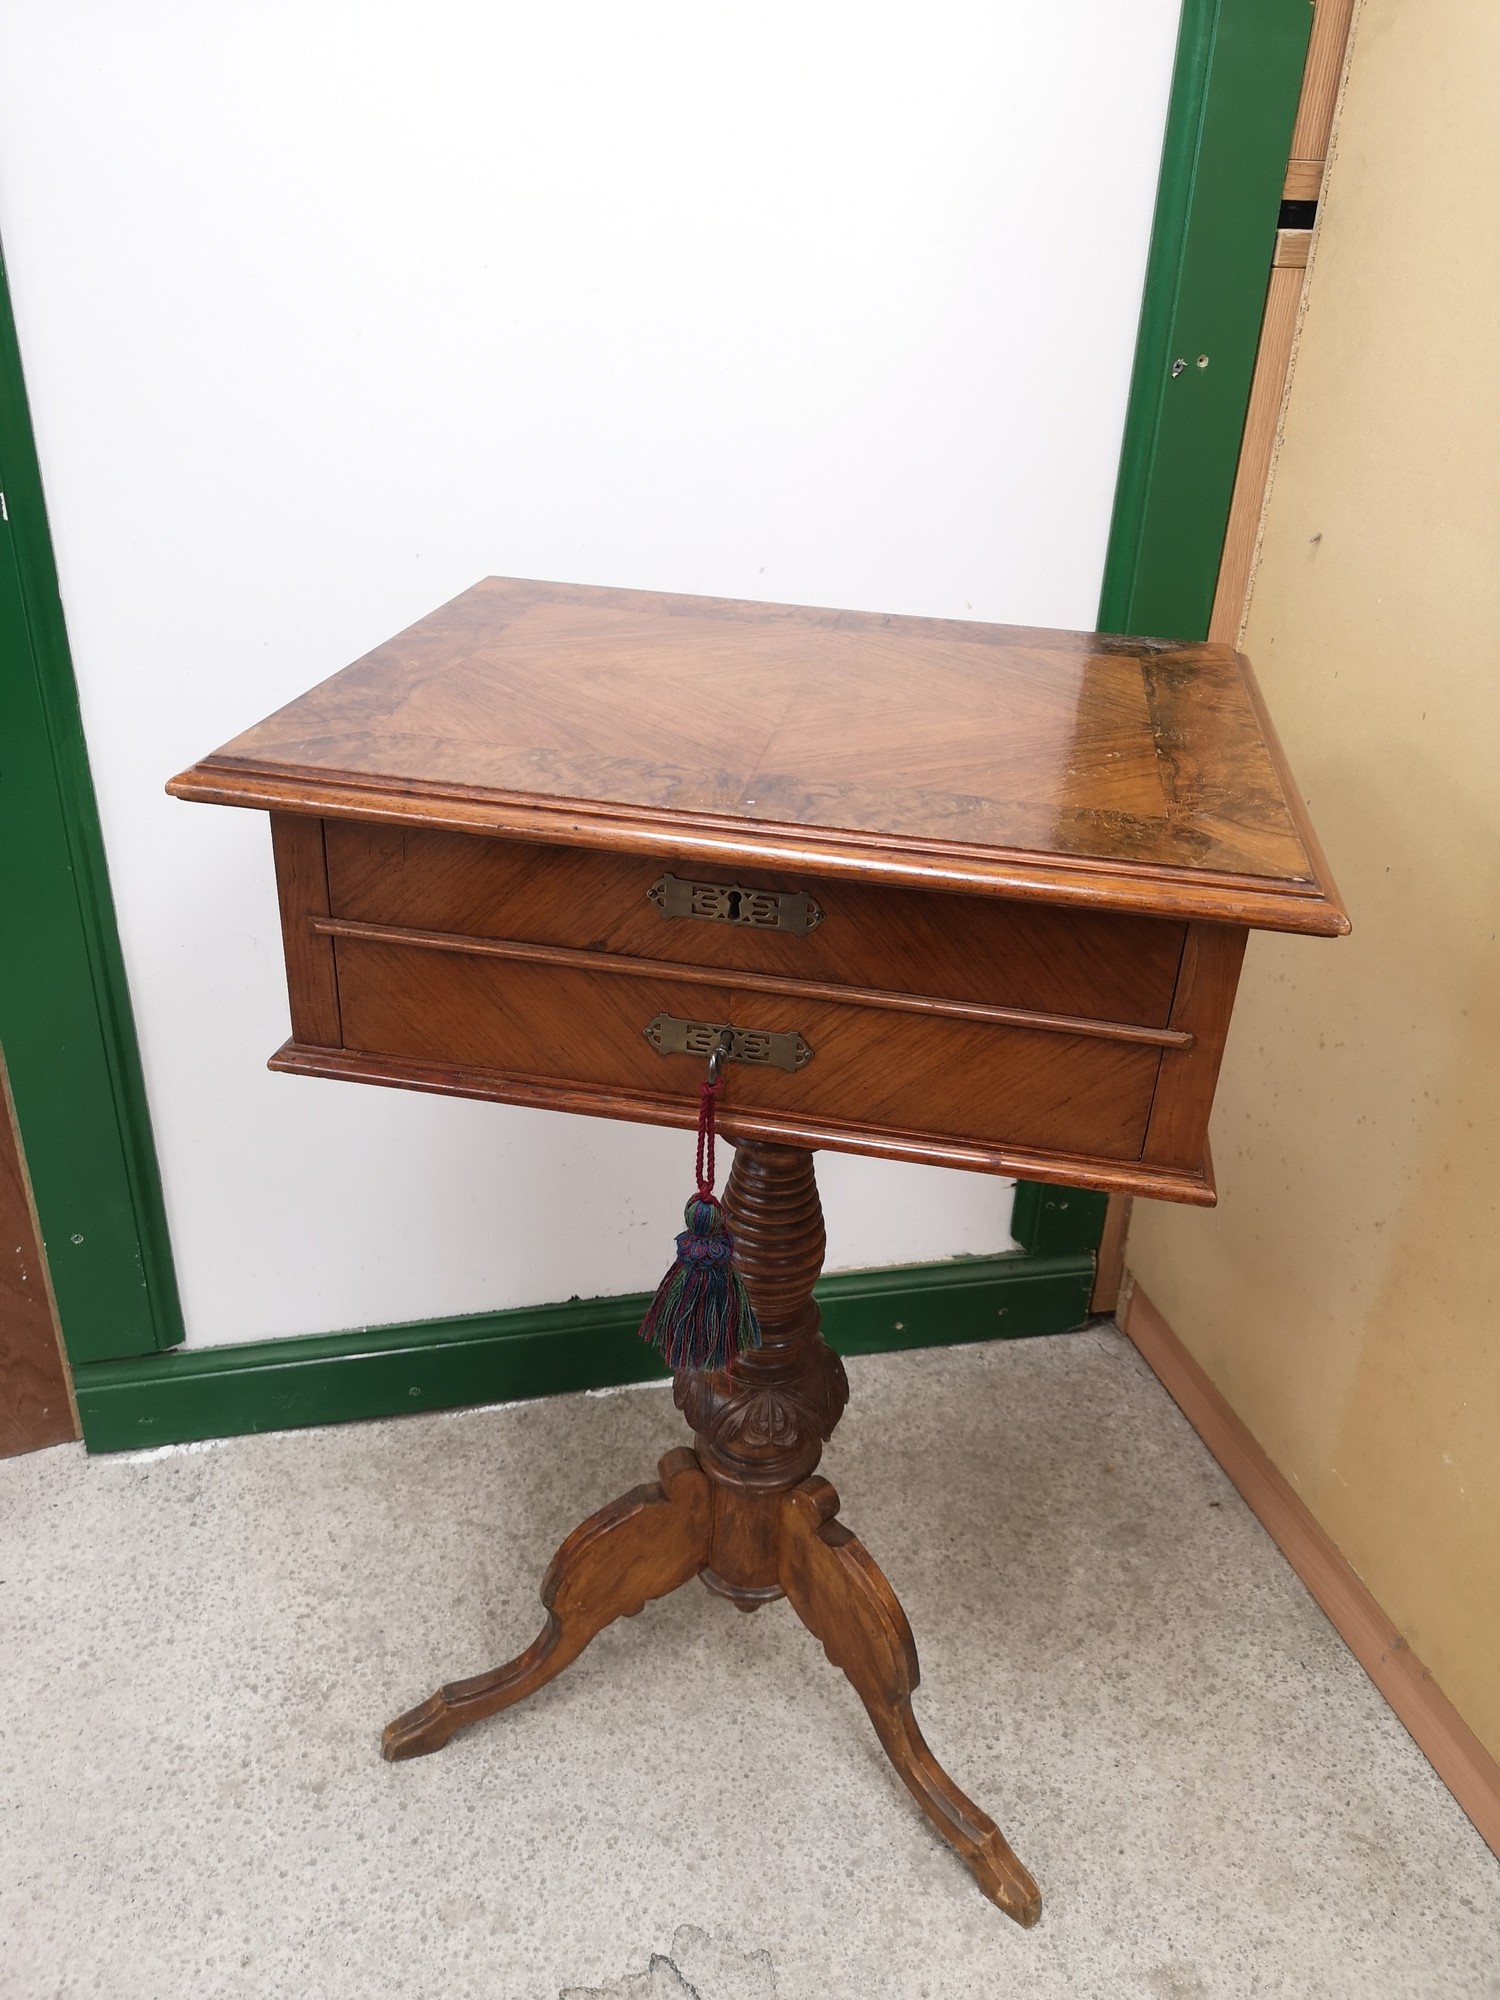 Victorian Walnut single pedistal sewing box with 2 drawers and key.